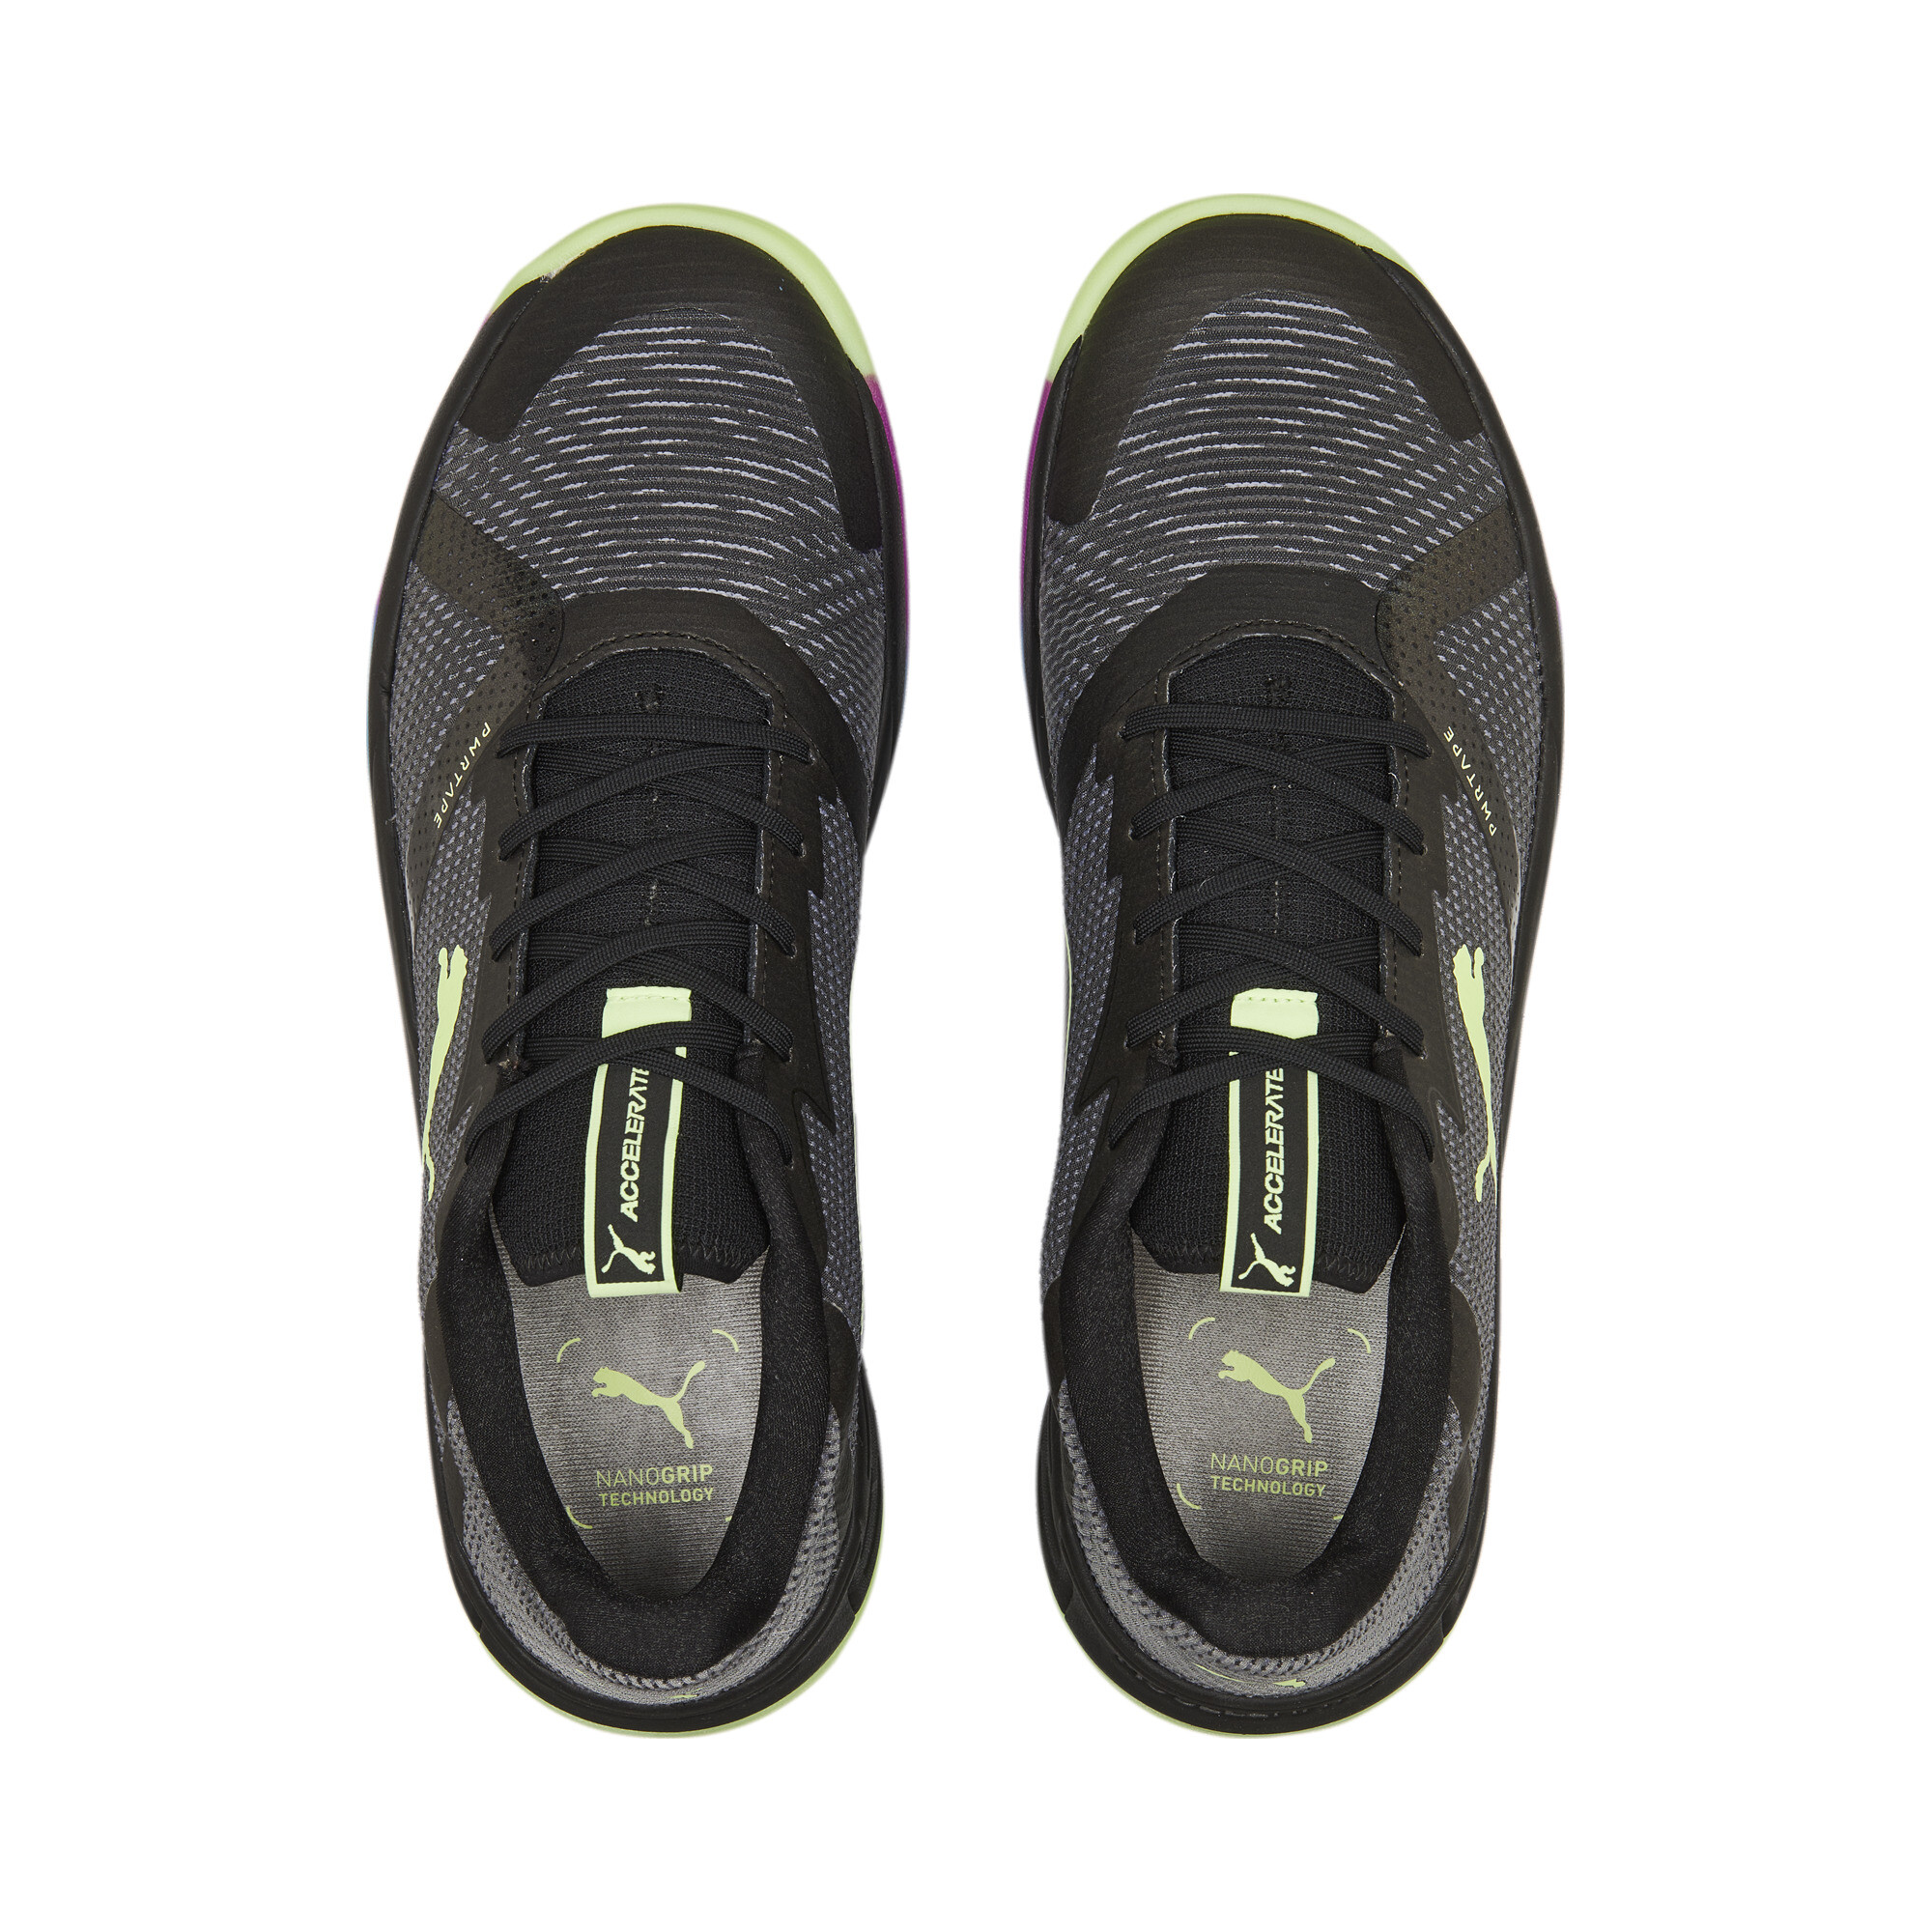 Men's PUMA Accelerate Turbo Nitro II Handball Shoes In Black, Size EU 40.5